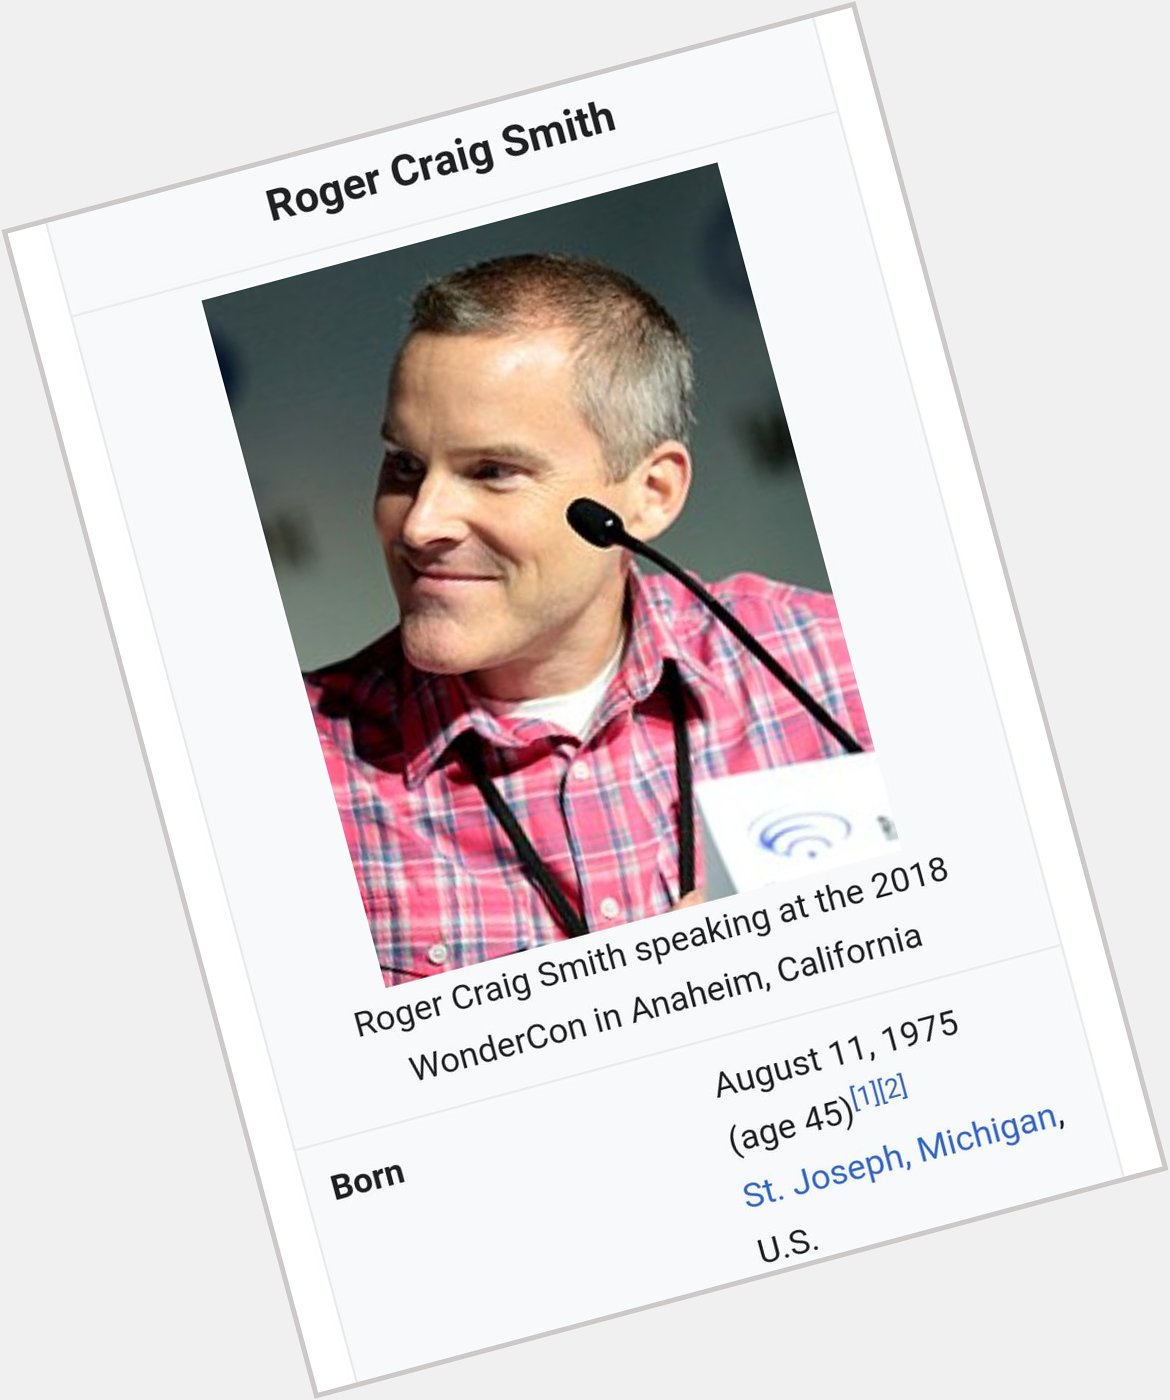 Oh hey it\s Roger Craig Smith\s birthday today
happy birthday 